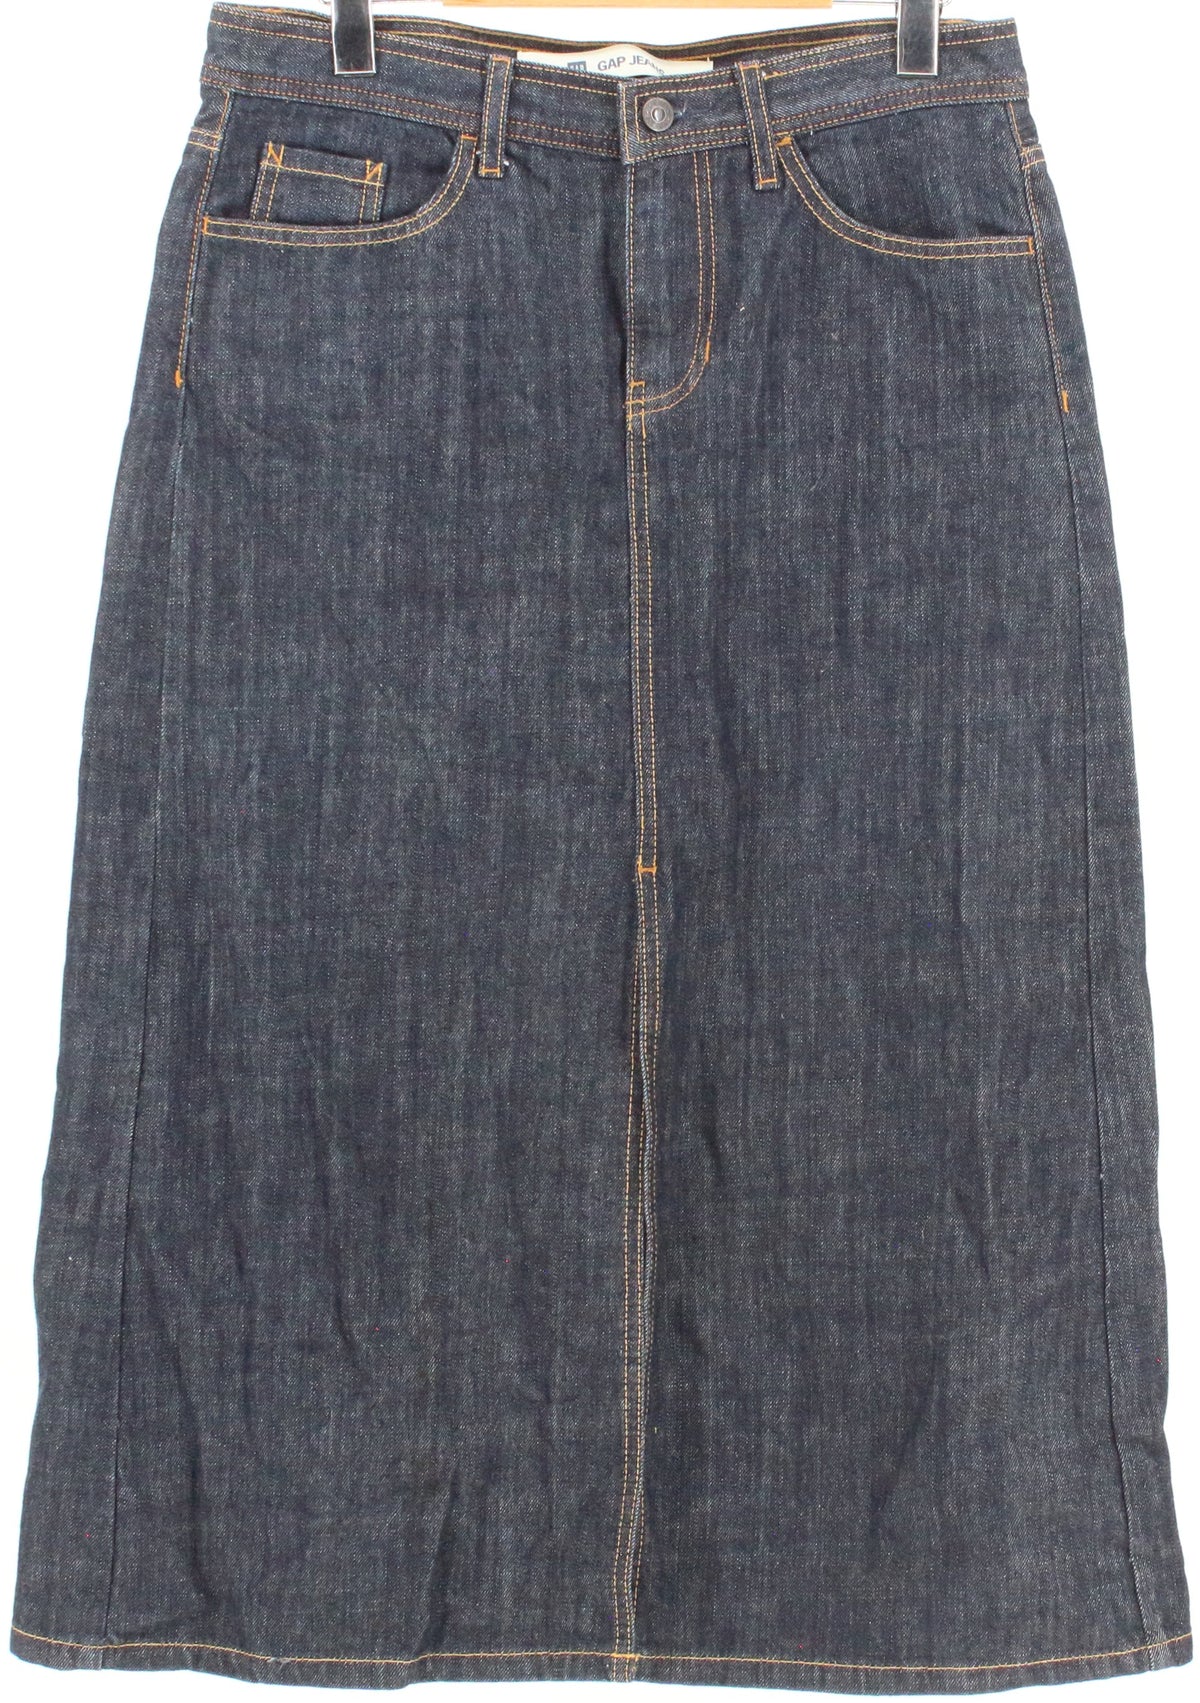 Gap Jeans Dark Blue Wash Front Slit Long Skirt